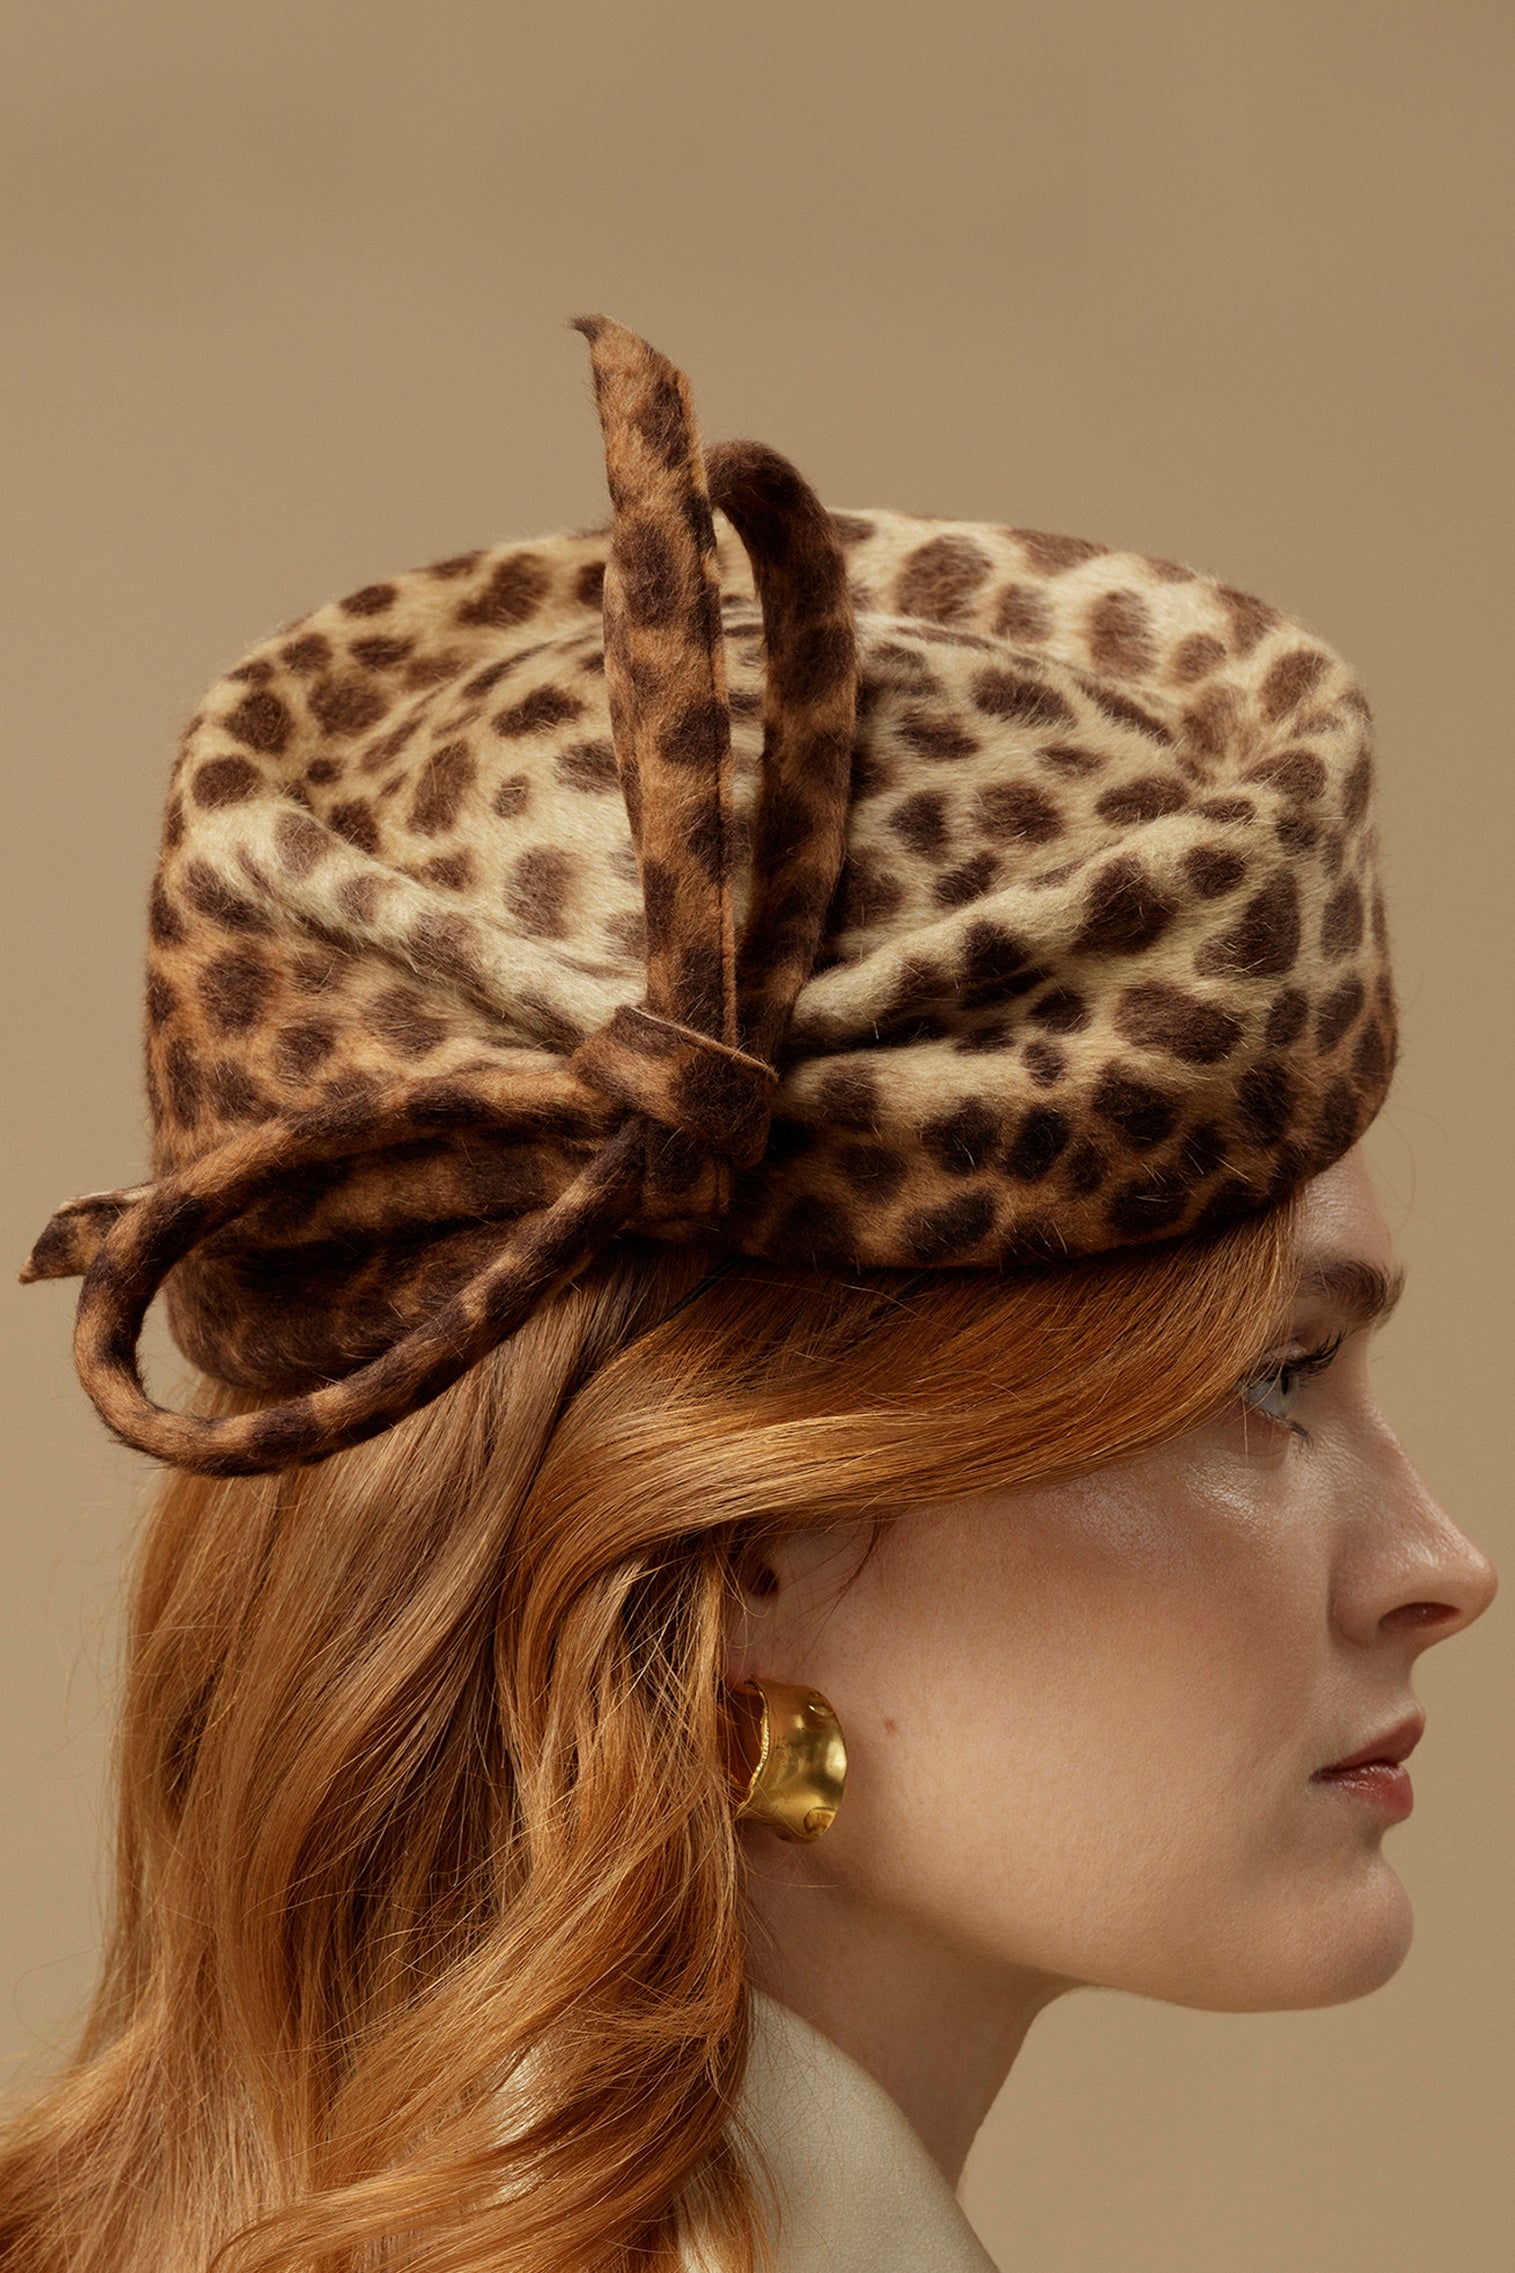 Leopard Mayfair Pillbox Hat - Products - Lock & Co. Hatters London UK